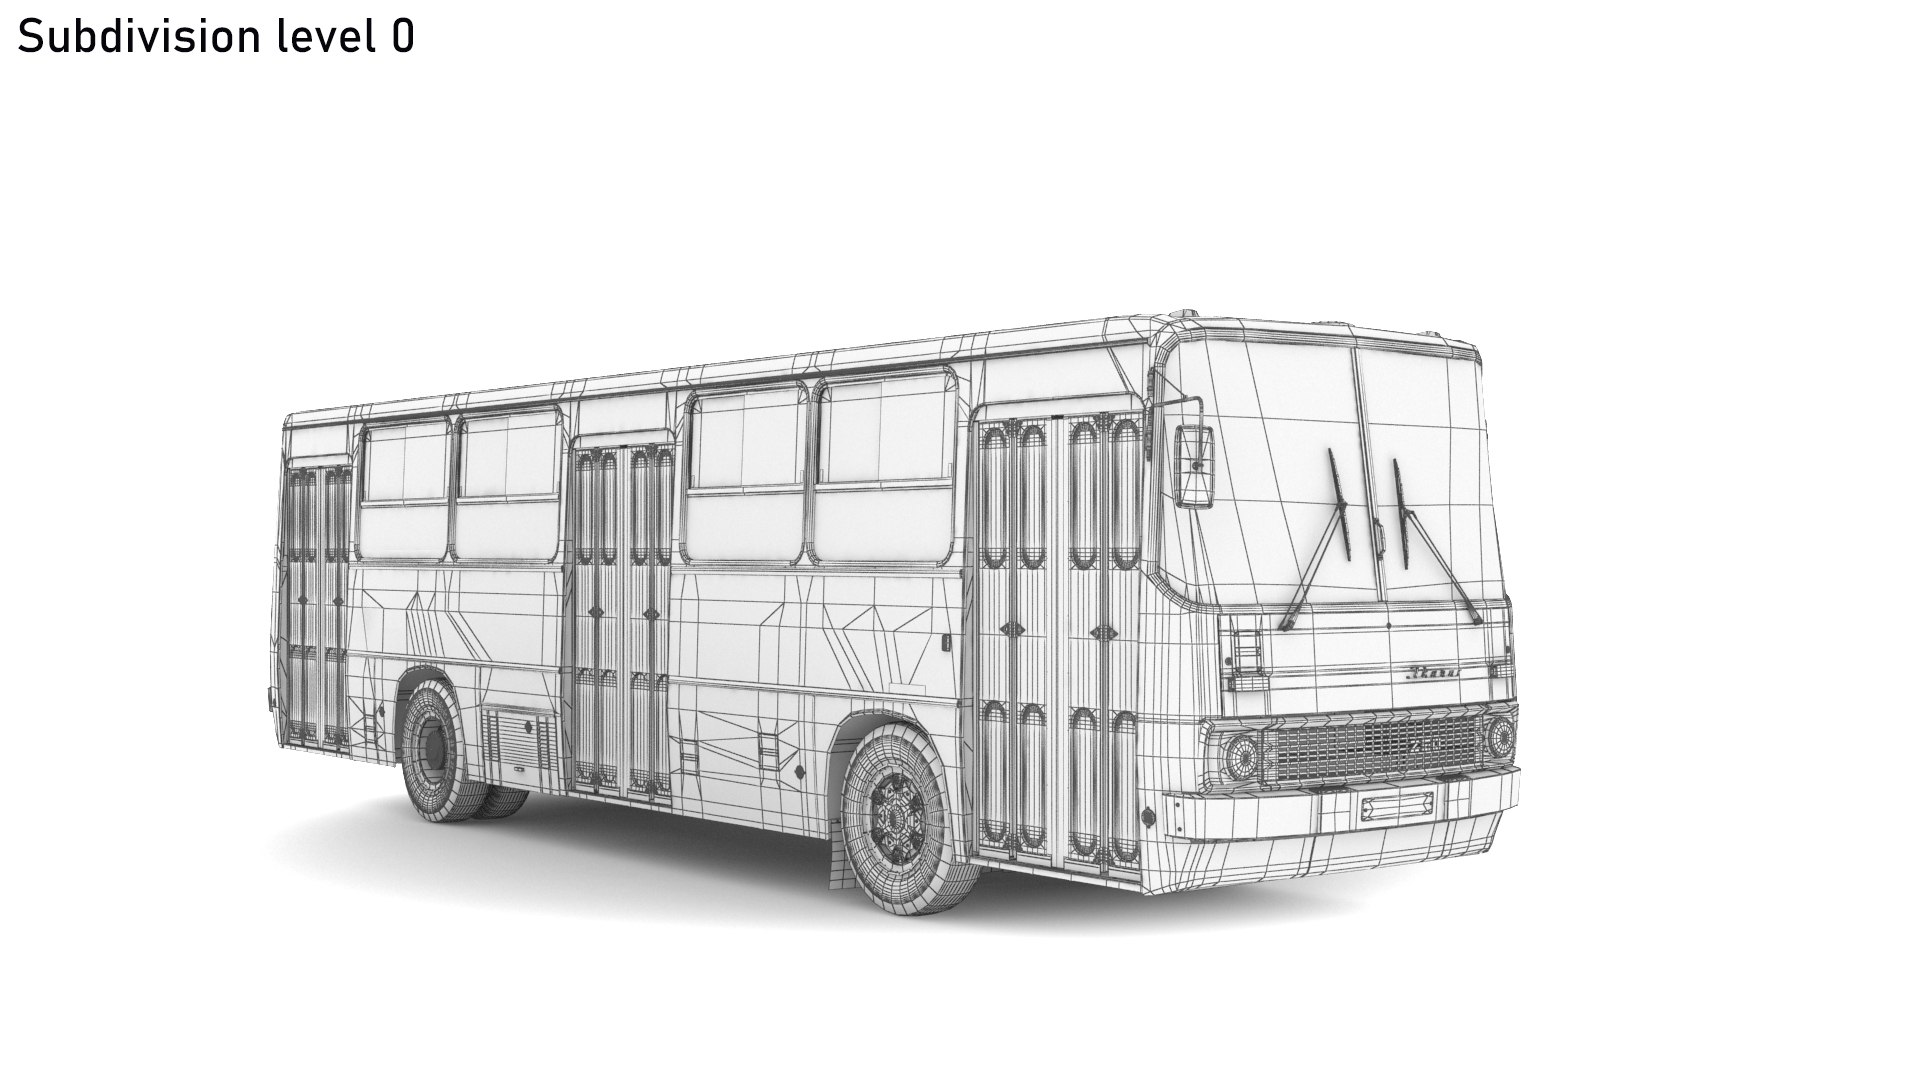 Ikarus 260 city bus by Lorddarthvik on DeviantArt